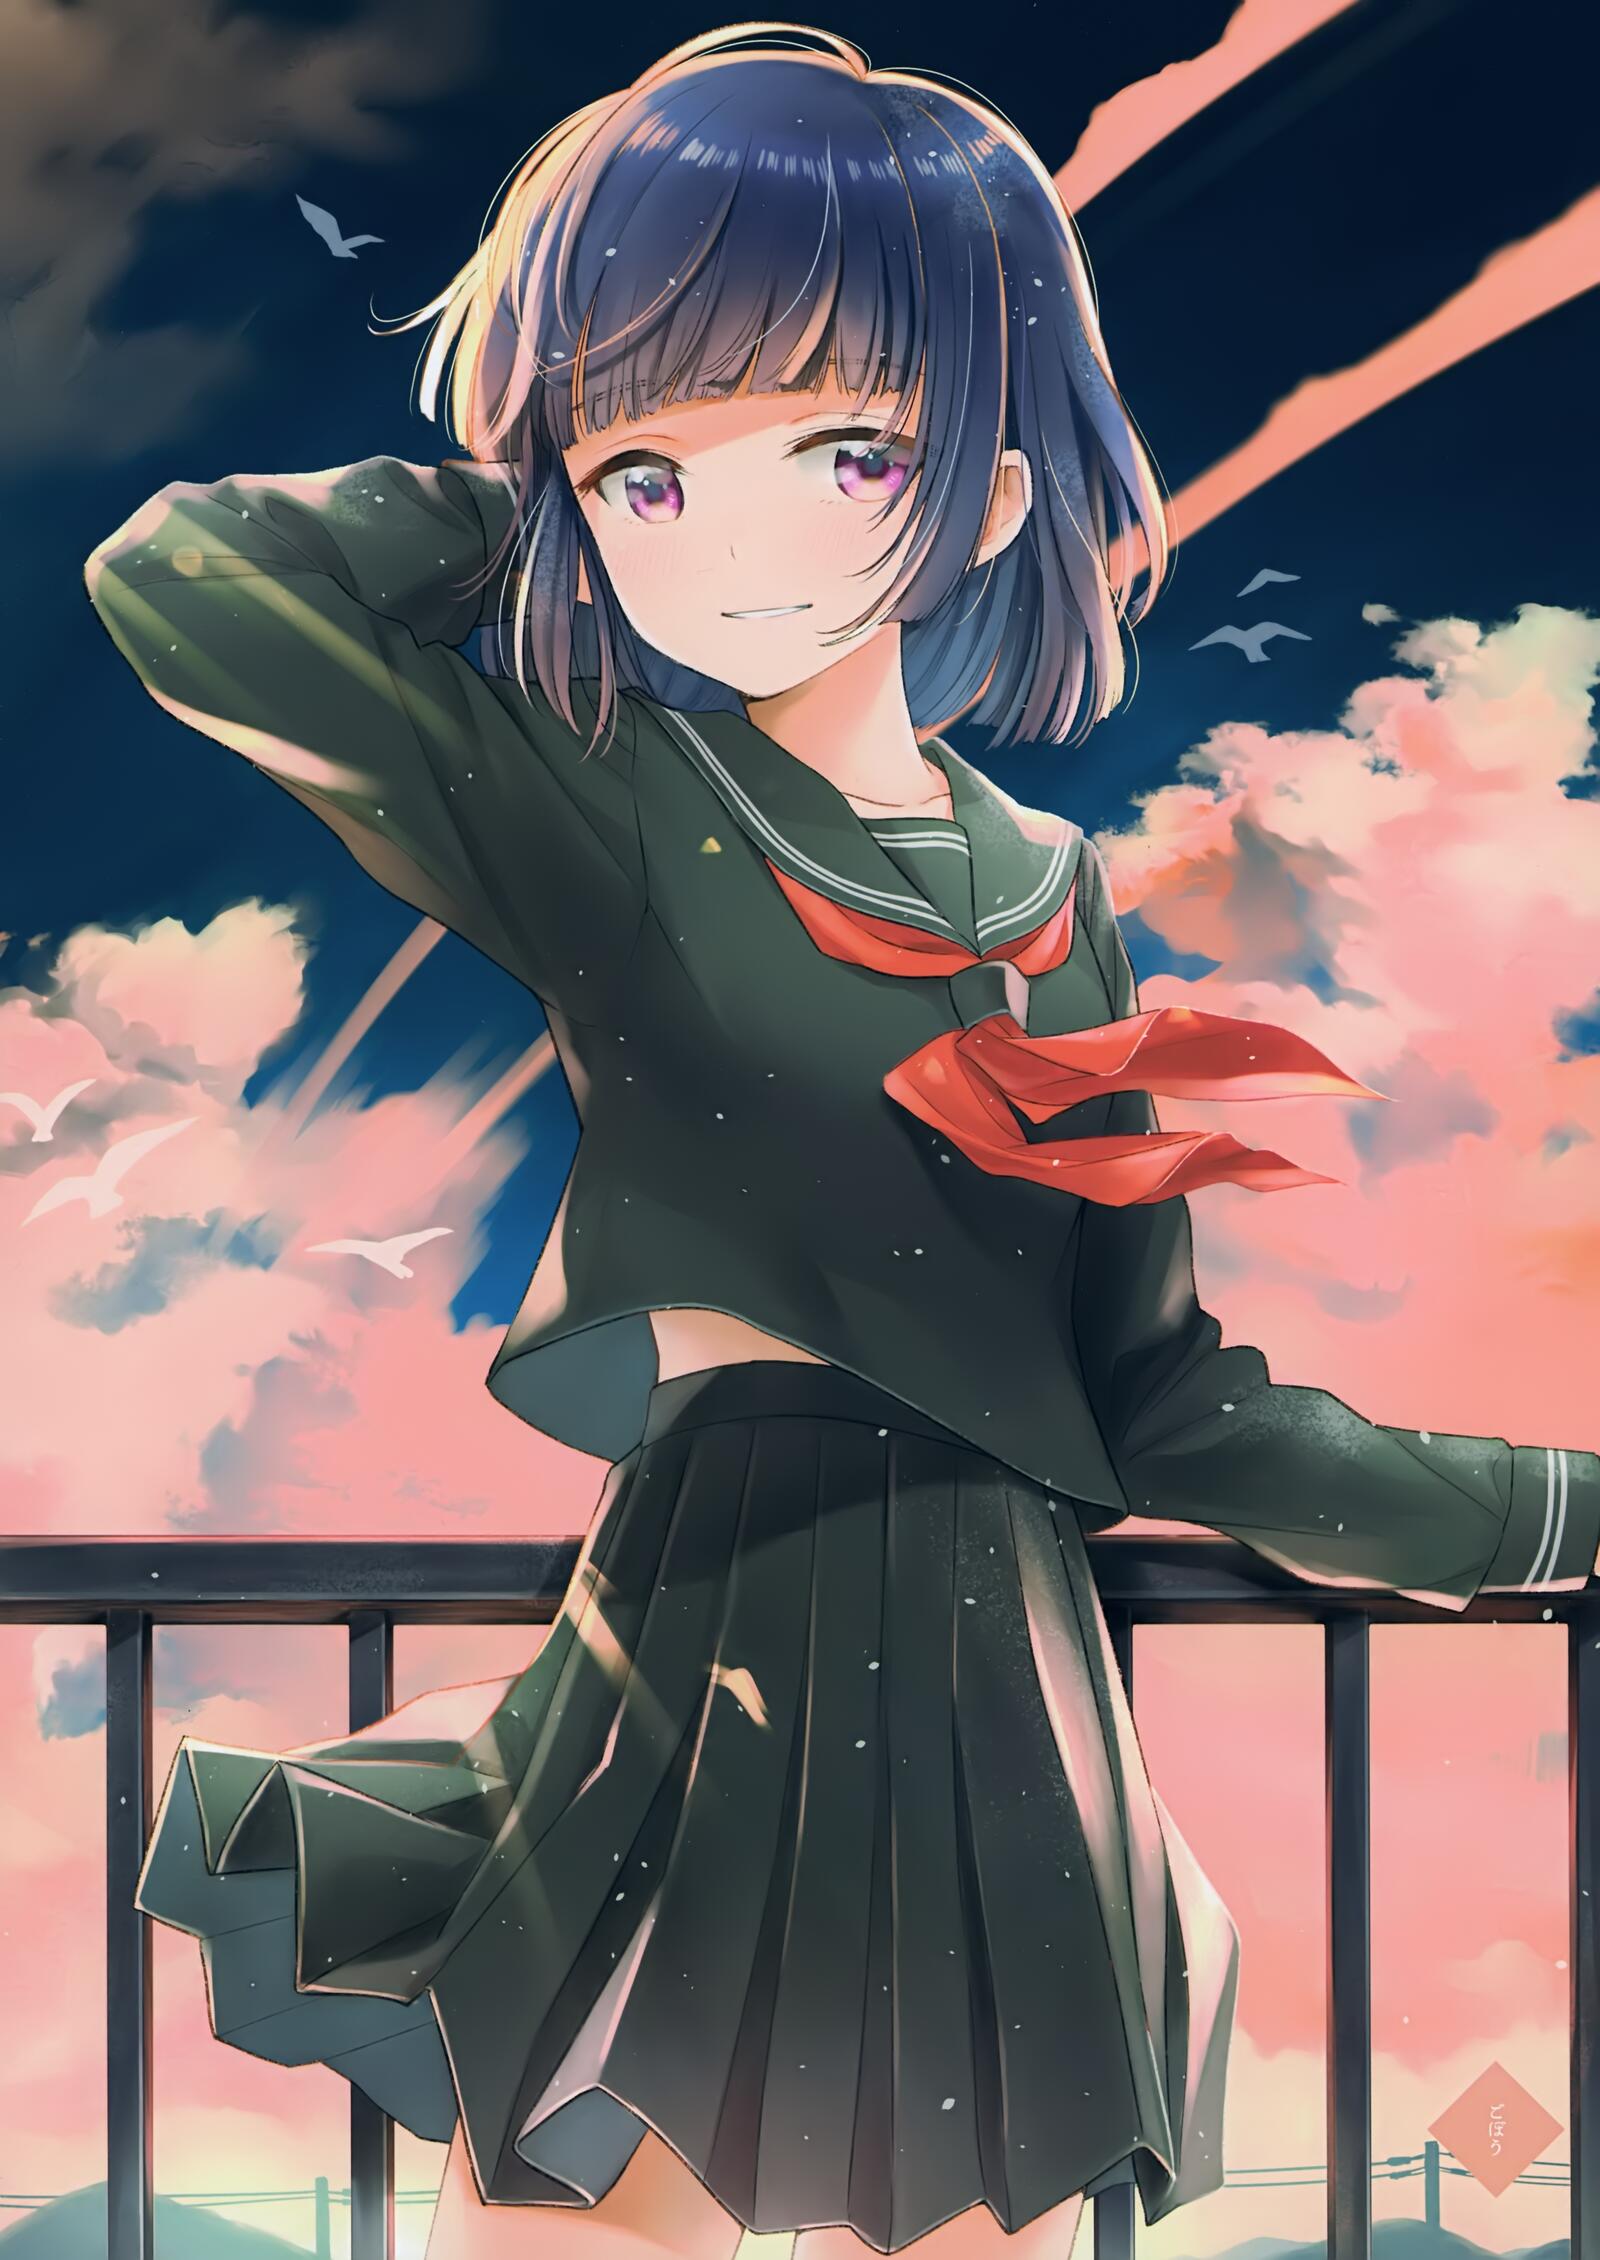 Wallpapers wallpaper anime girl school uniform smiling on the desktop